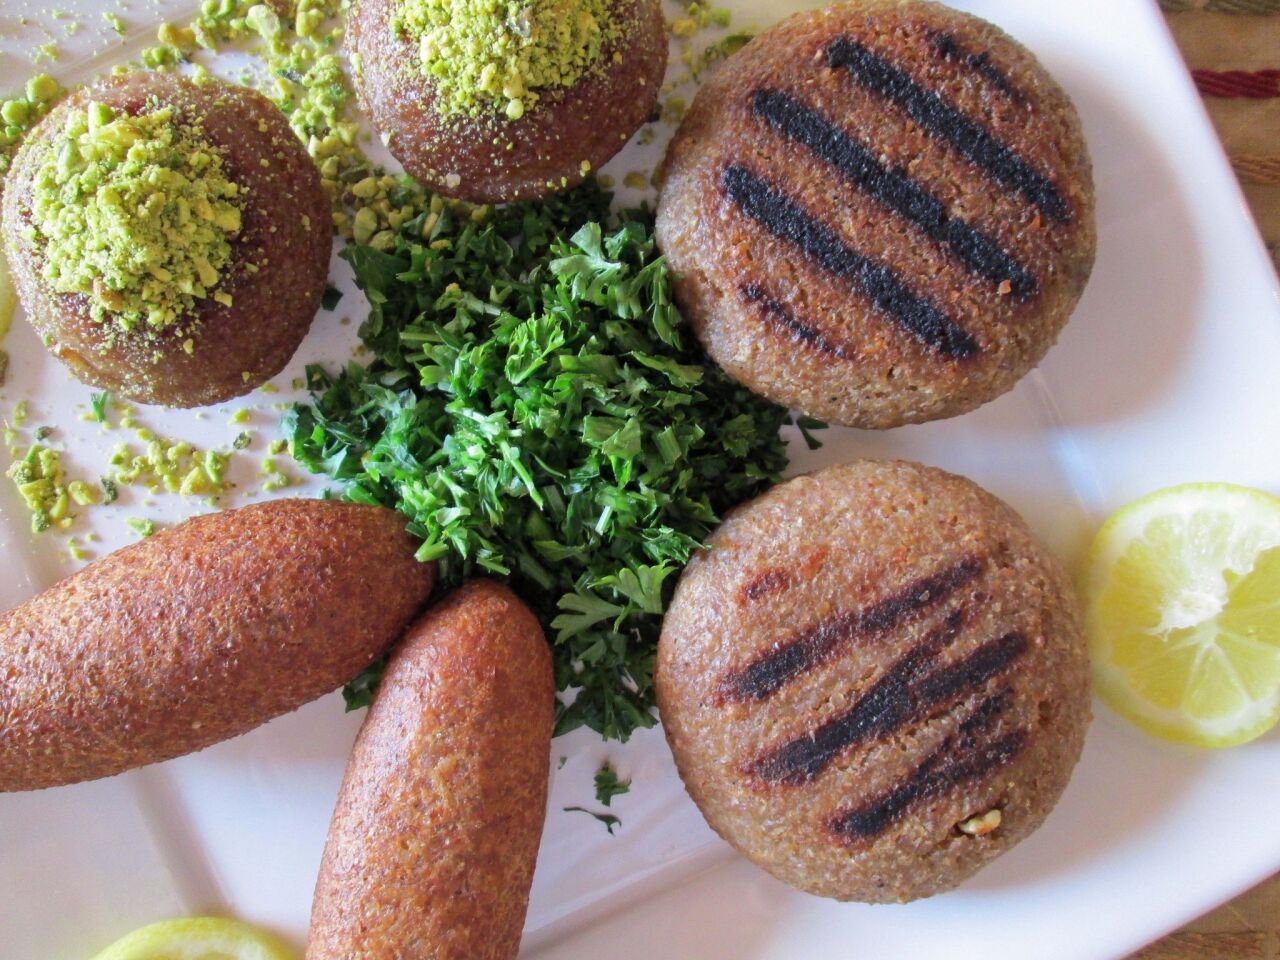 Aleppo's Kitchen serves several kibbe varieties.